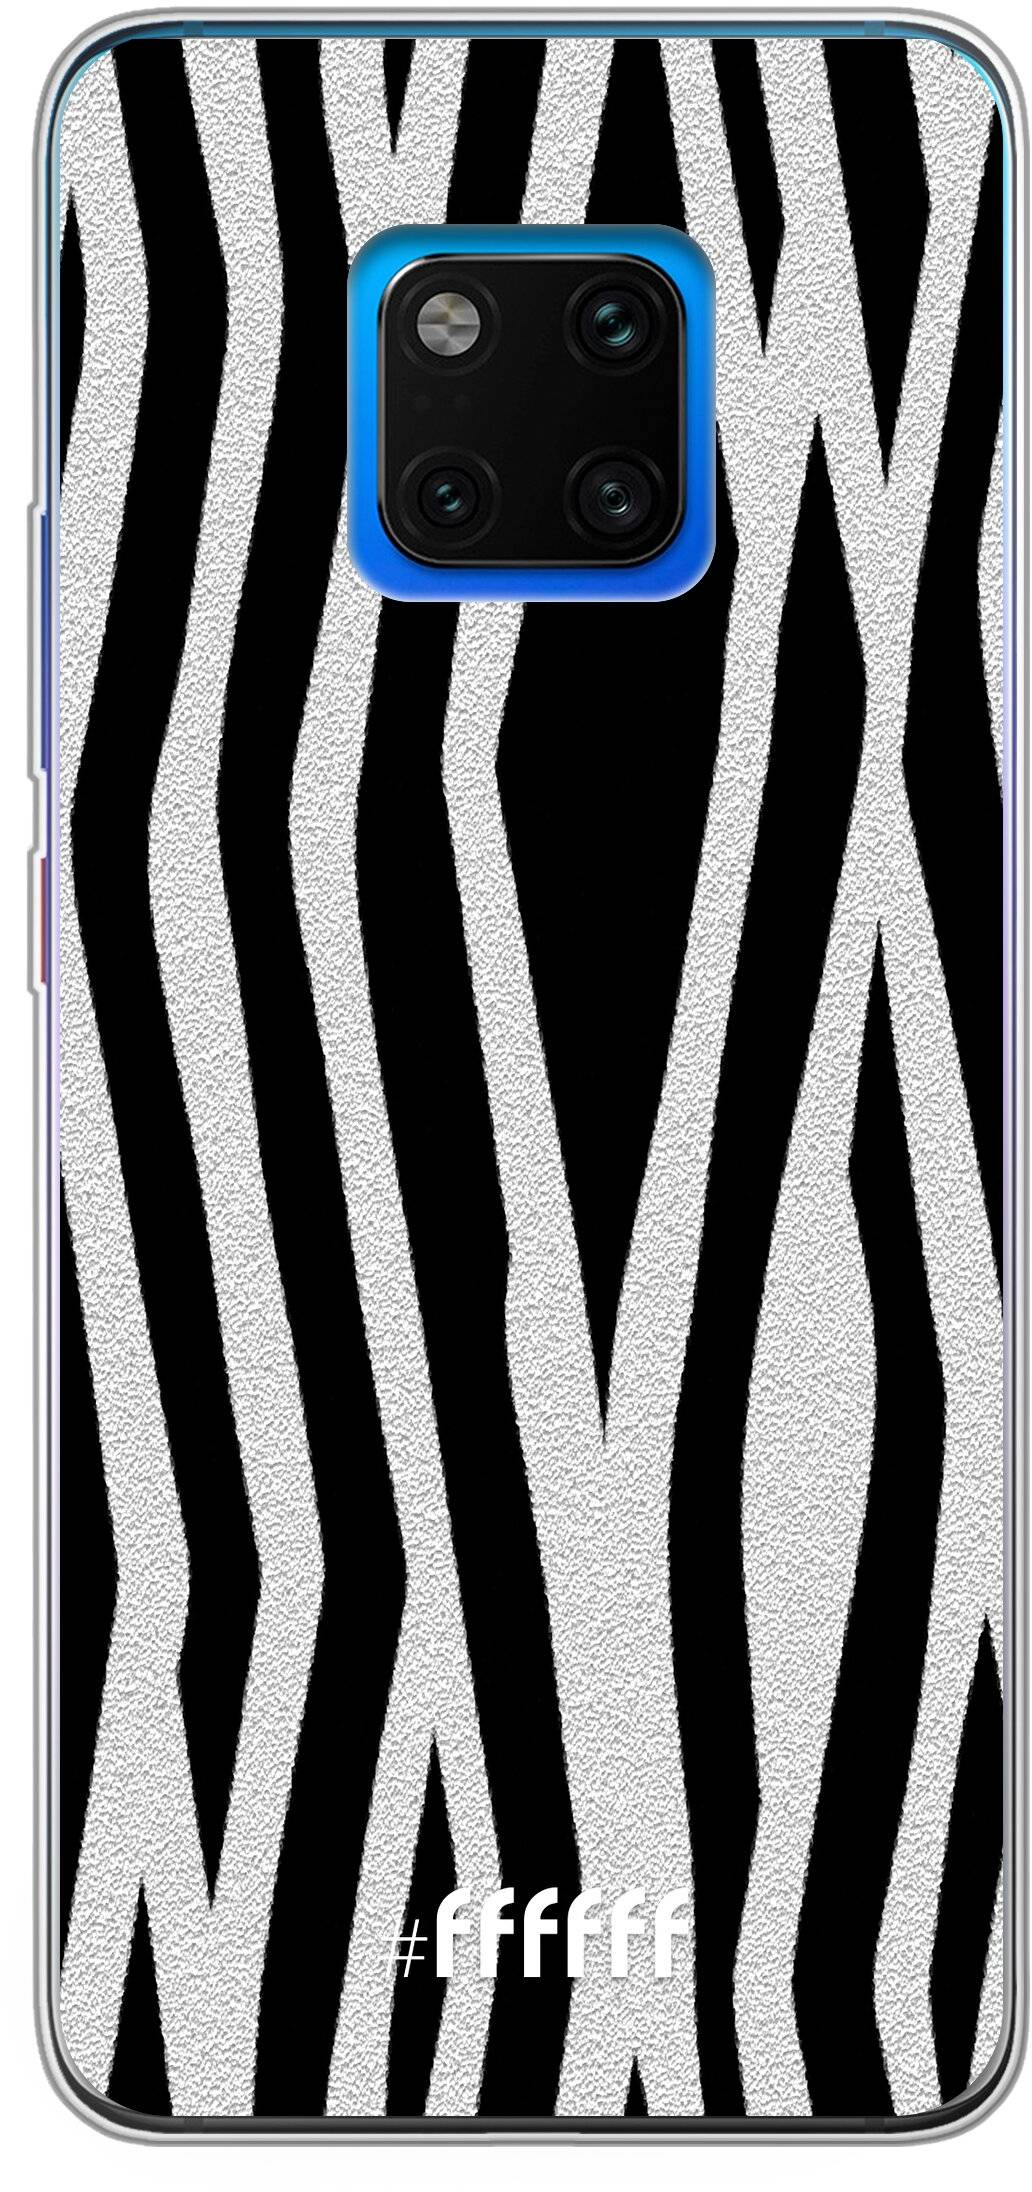 Zebra Print Mate 20 Pro